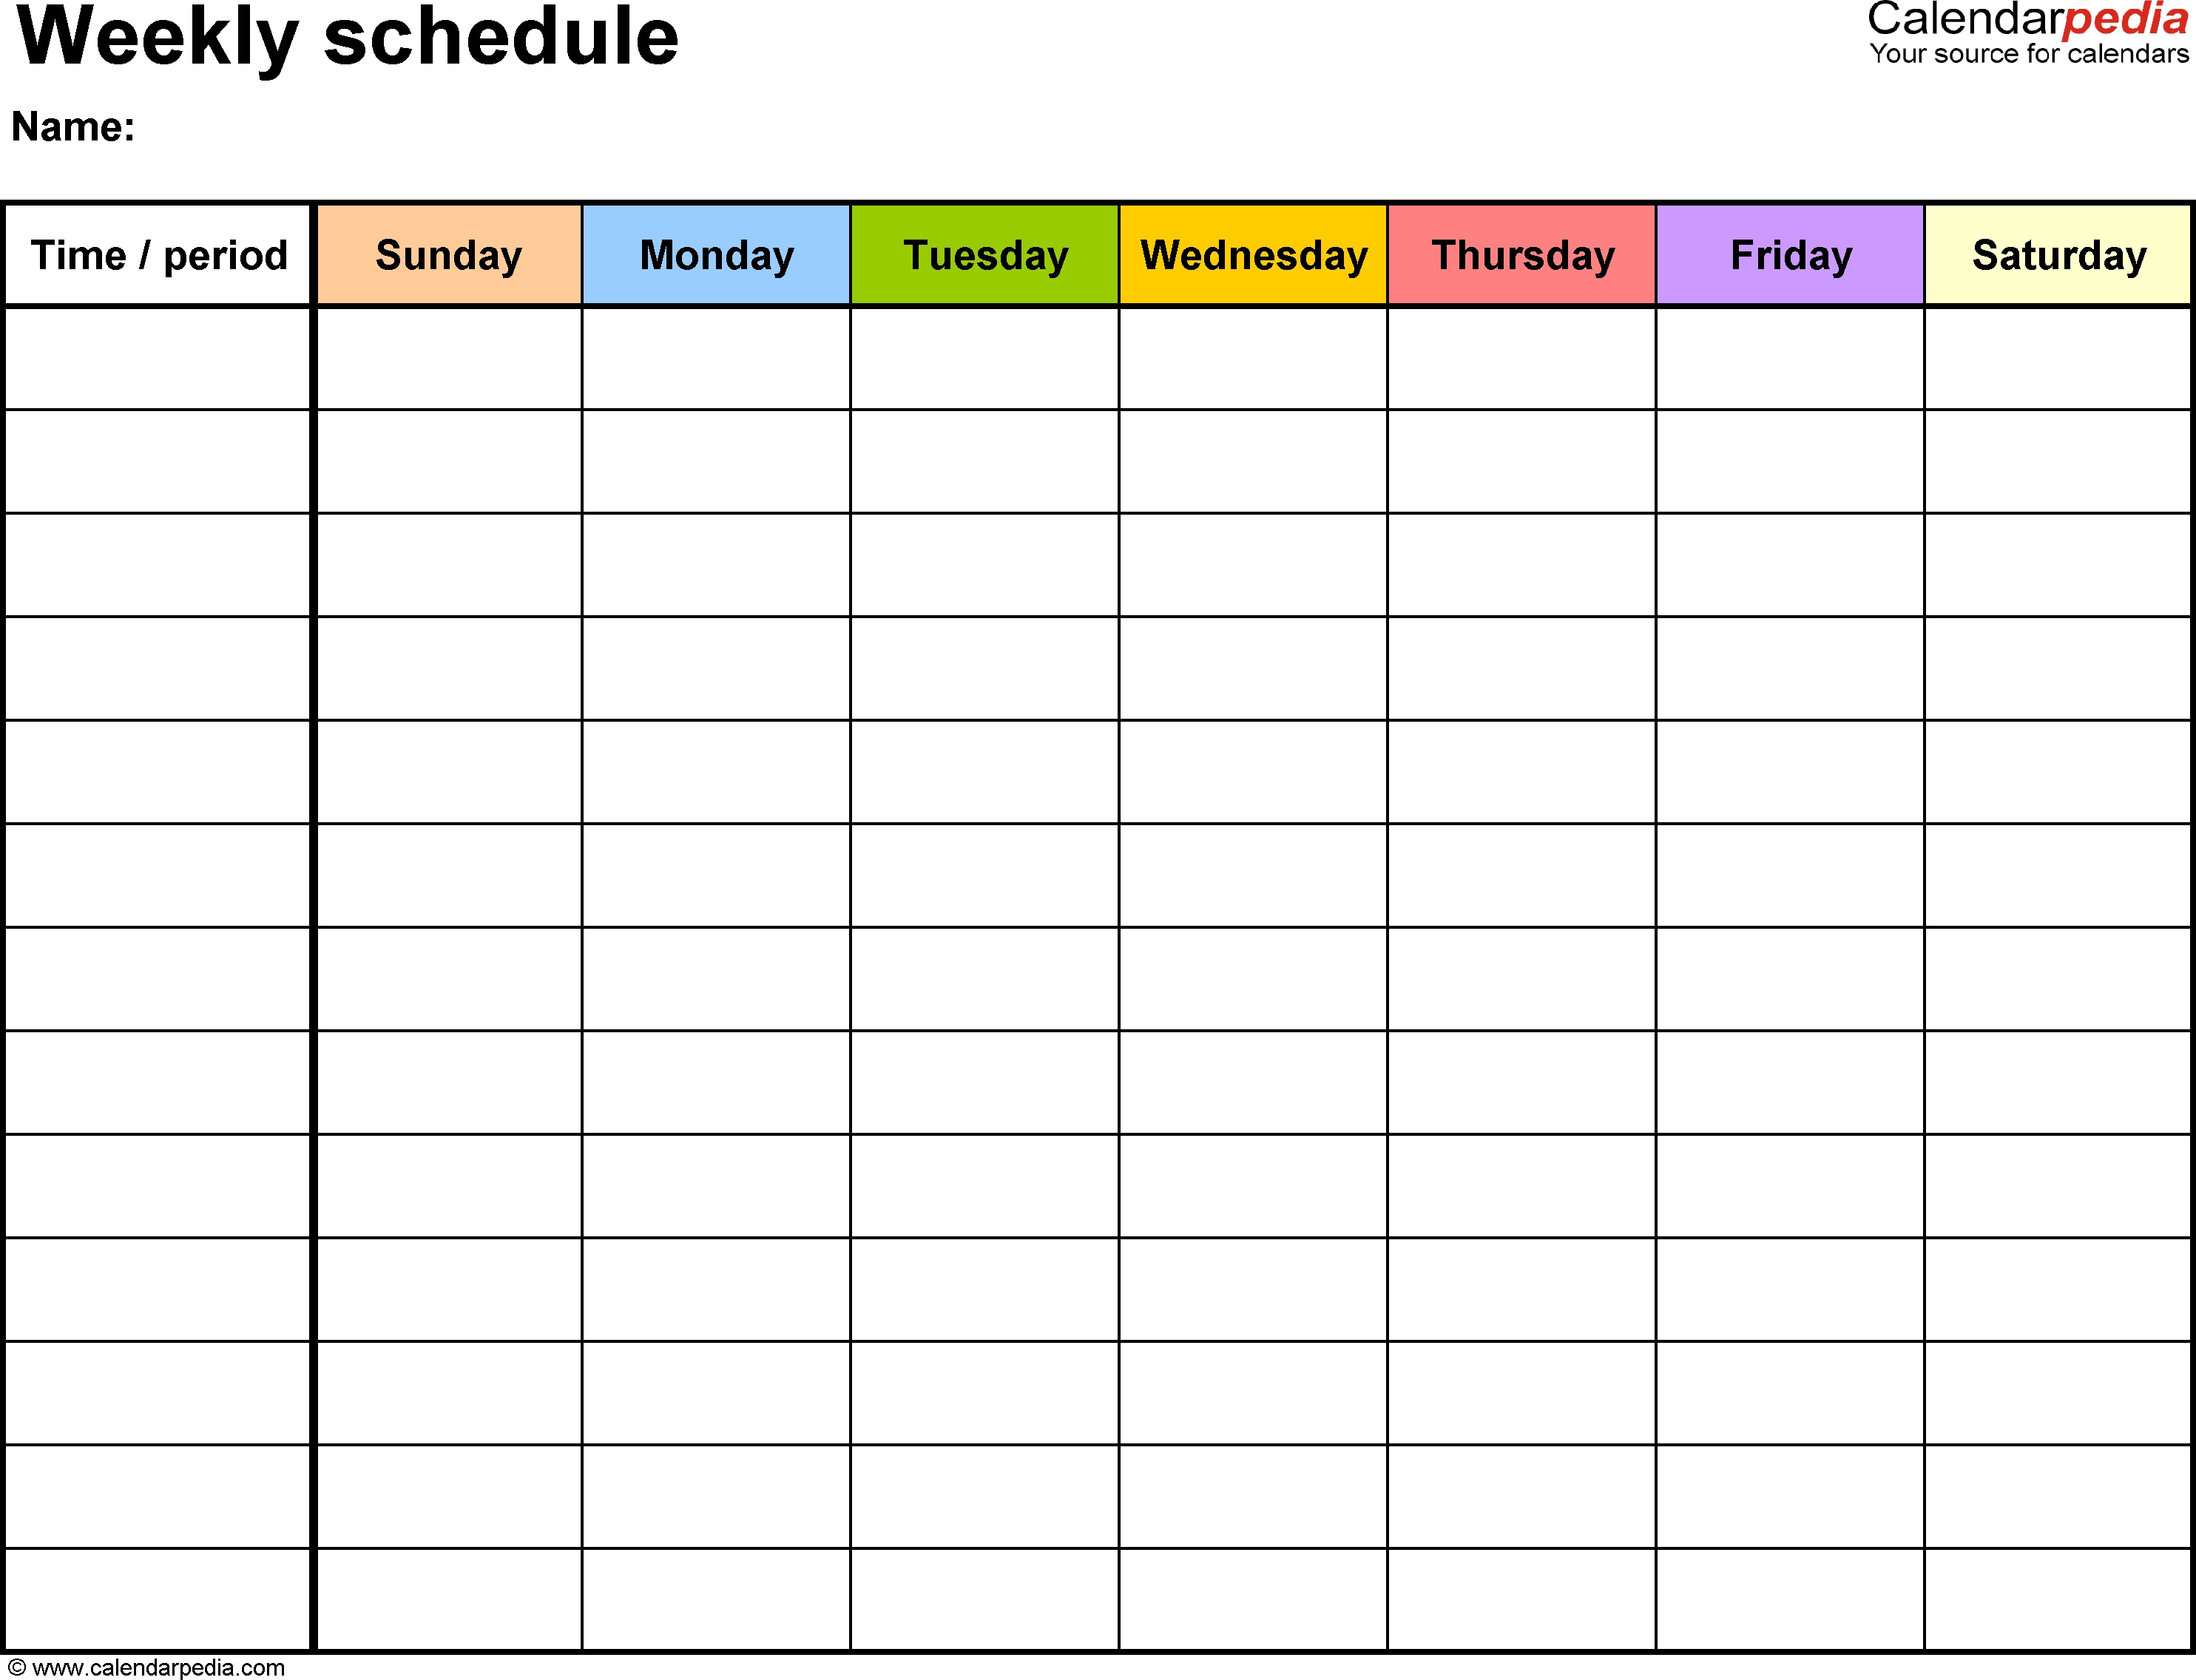 Free Weekly Schedule Templates For Word - 18 Templates 2 Week Calendar Blank